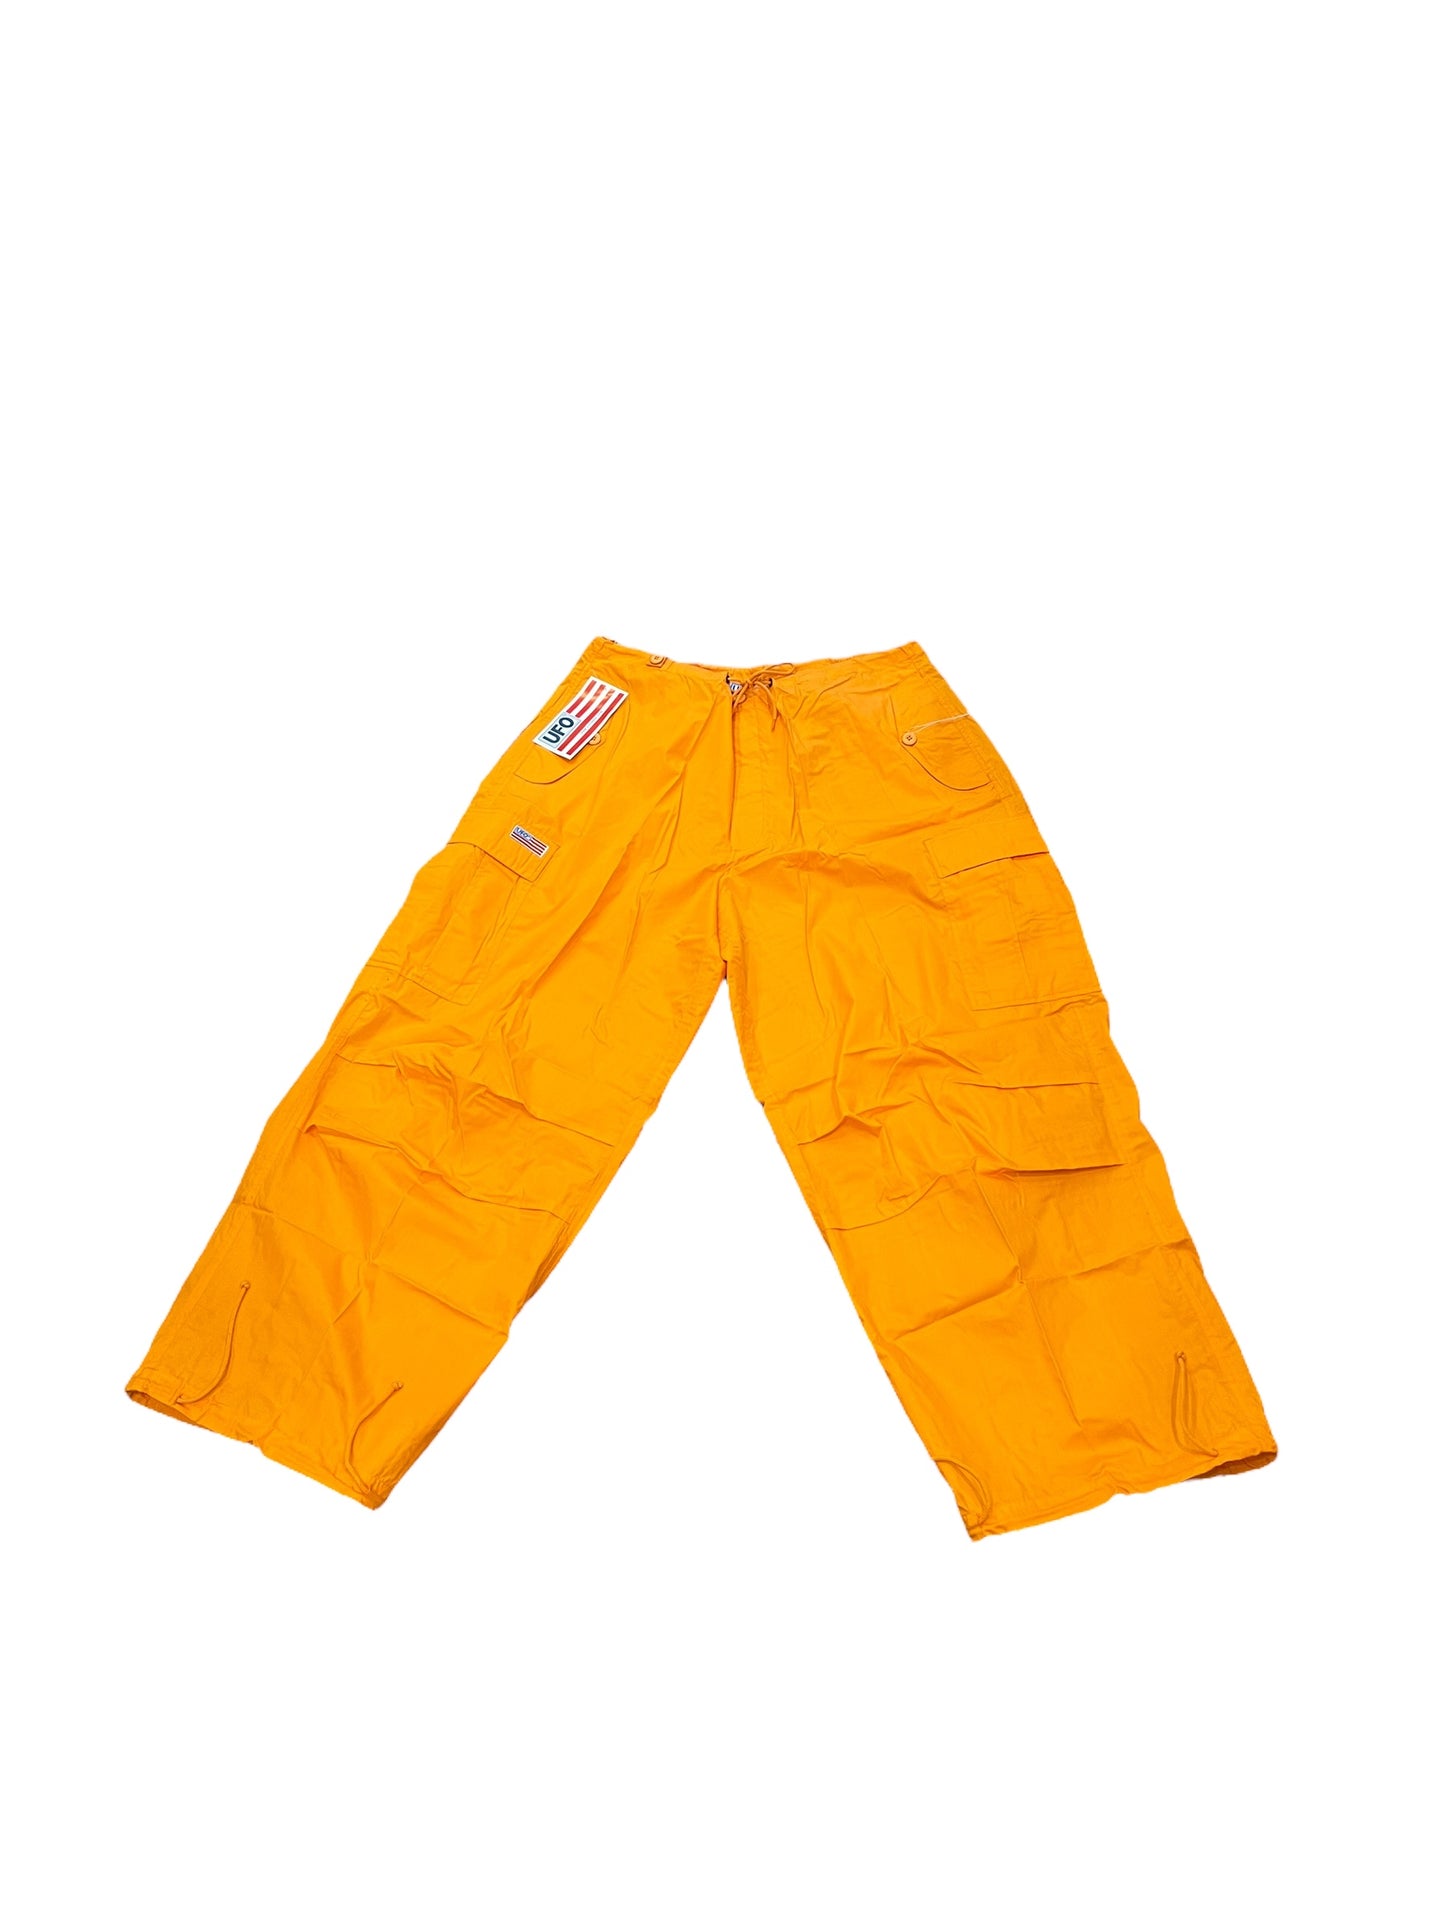 UFO Orange Parachute Pants 80018